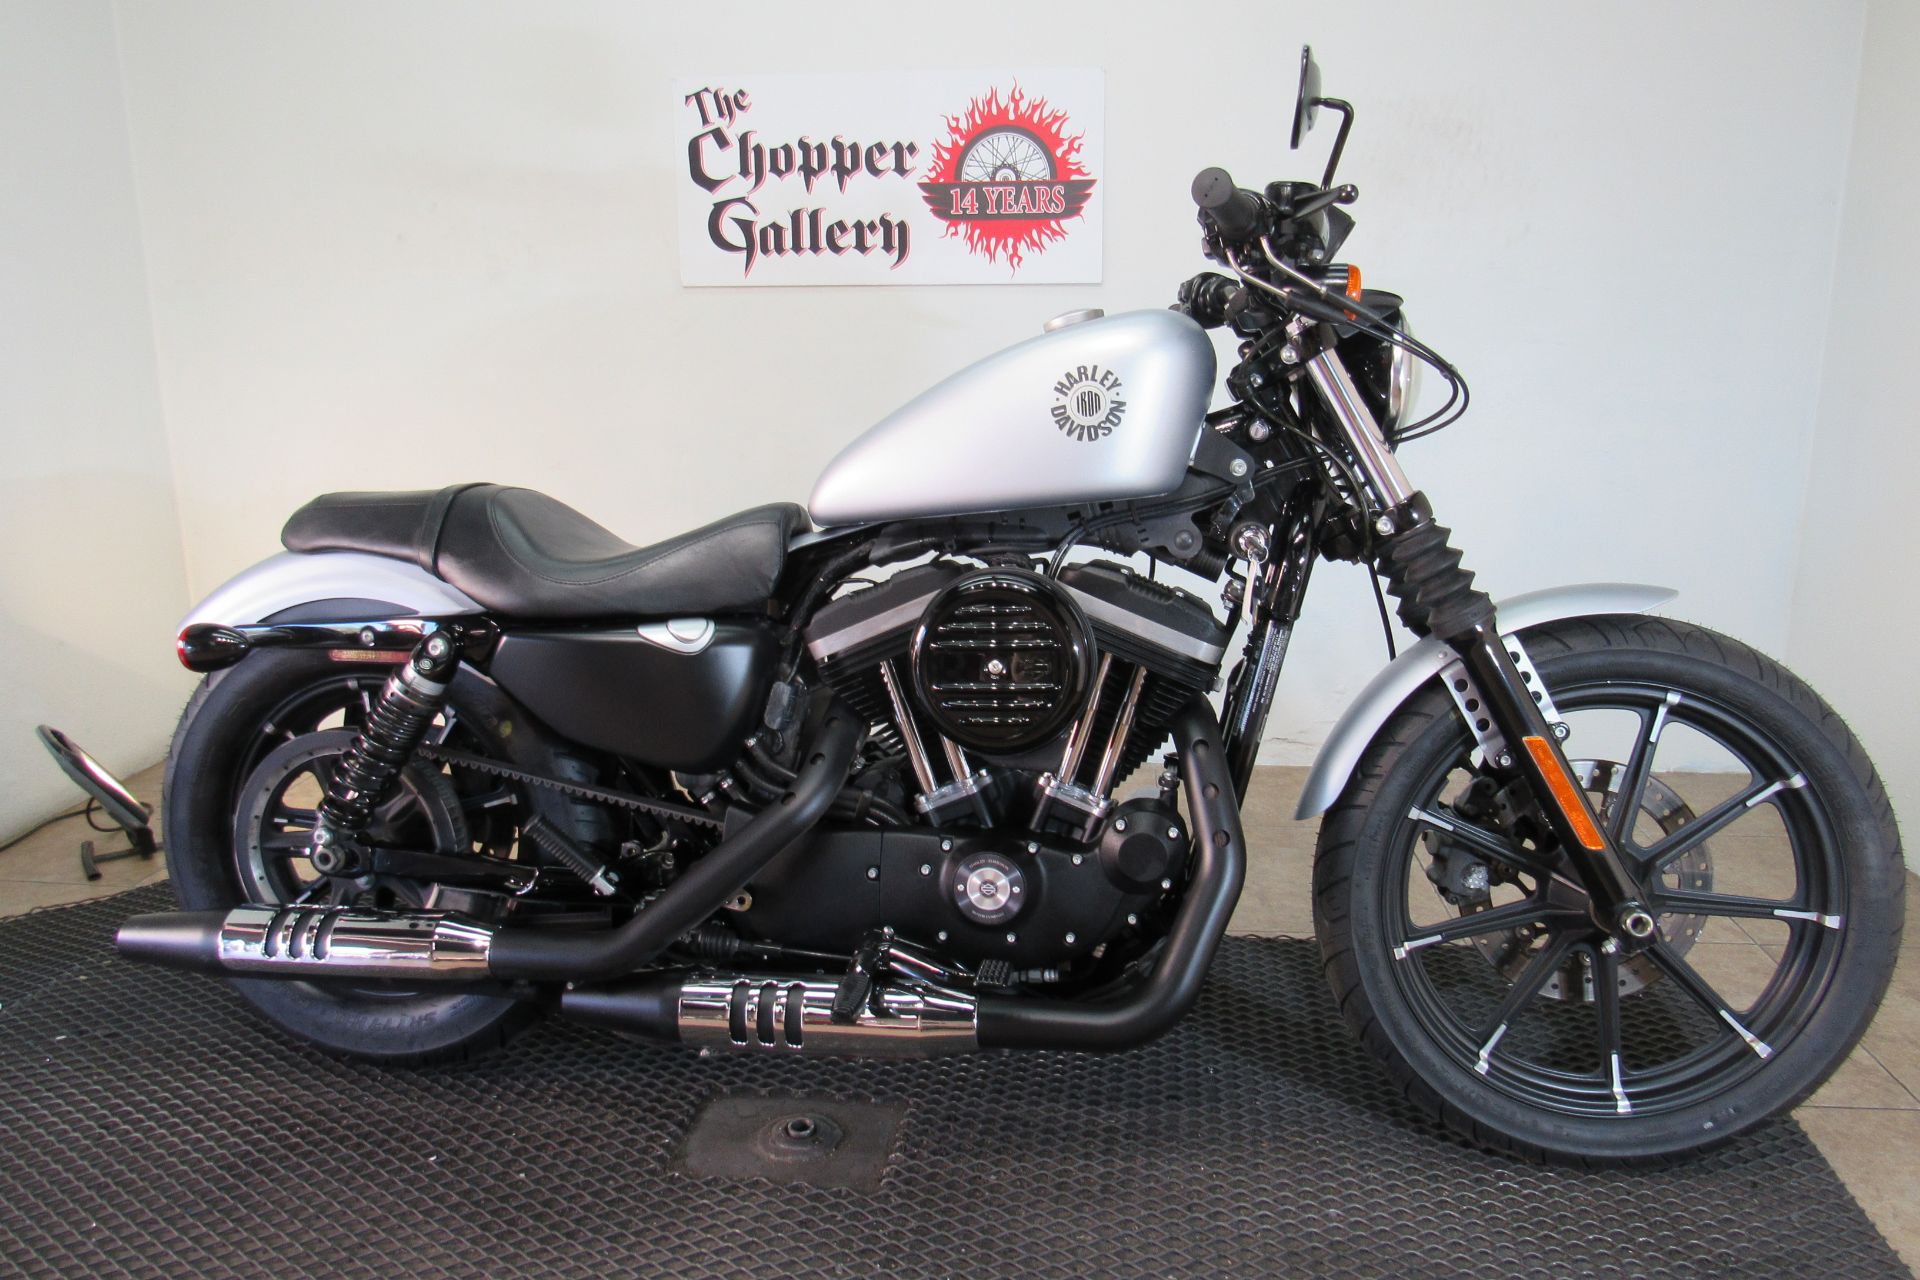 2020 Harley-Davidson Iron 883™ in Temecula, California - Photo 15